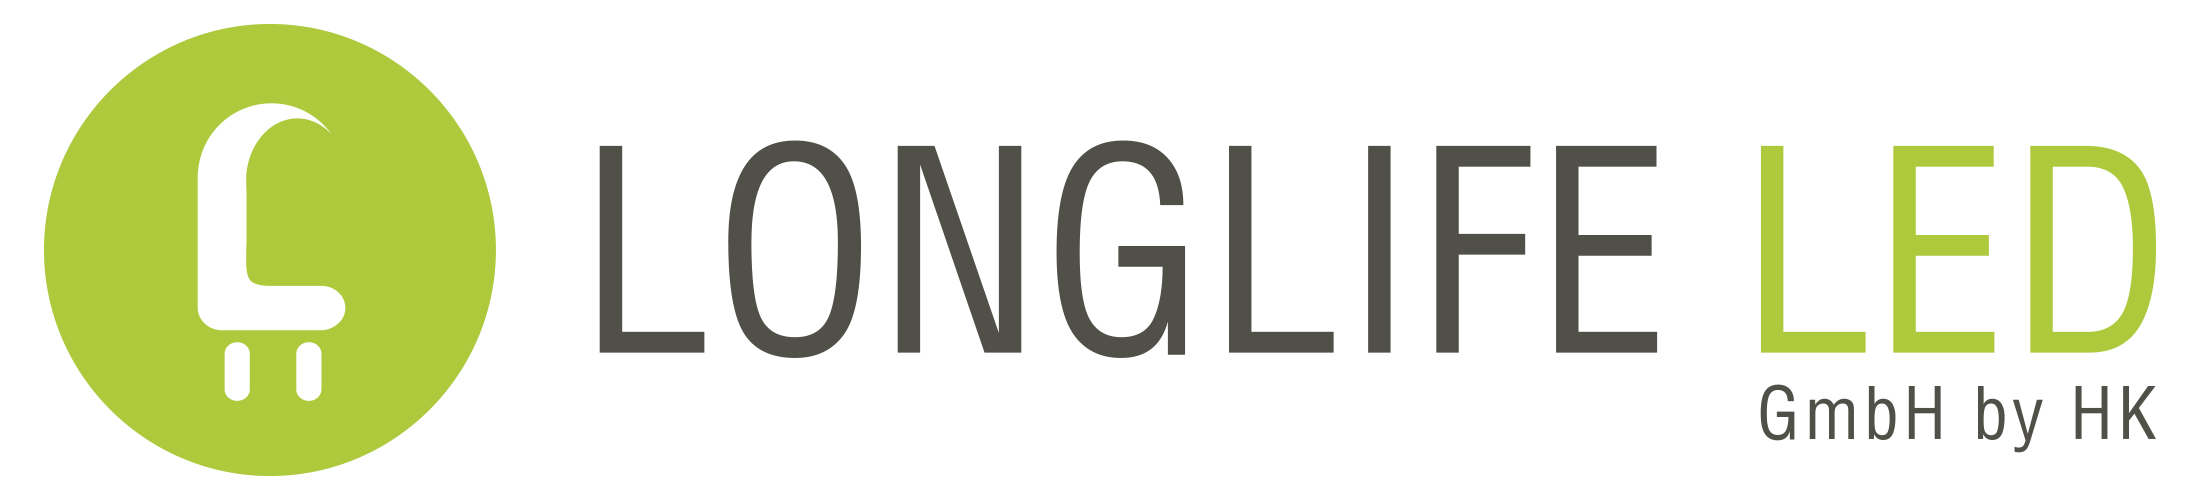 Logo_LongLifeLED_RGB_2200x500px_300dpi_1.png